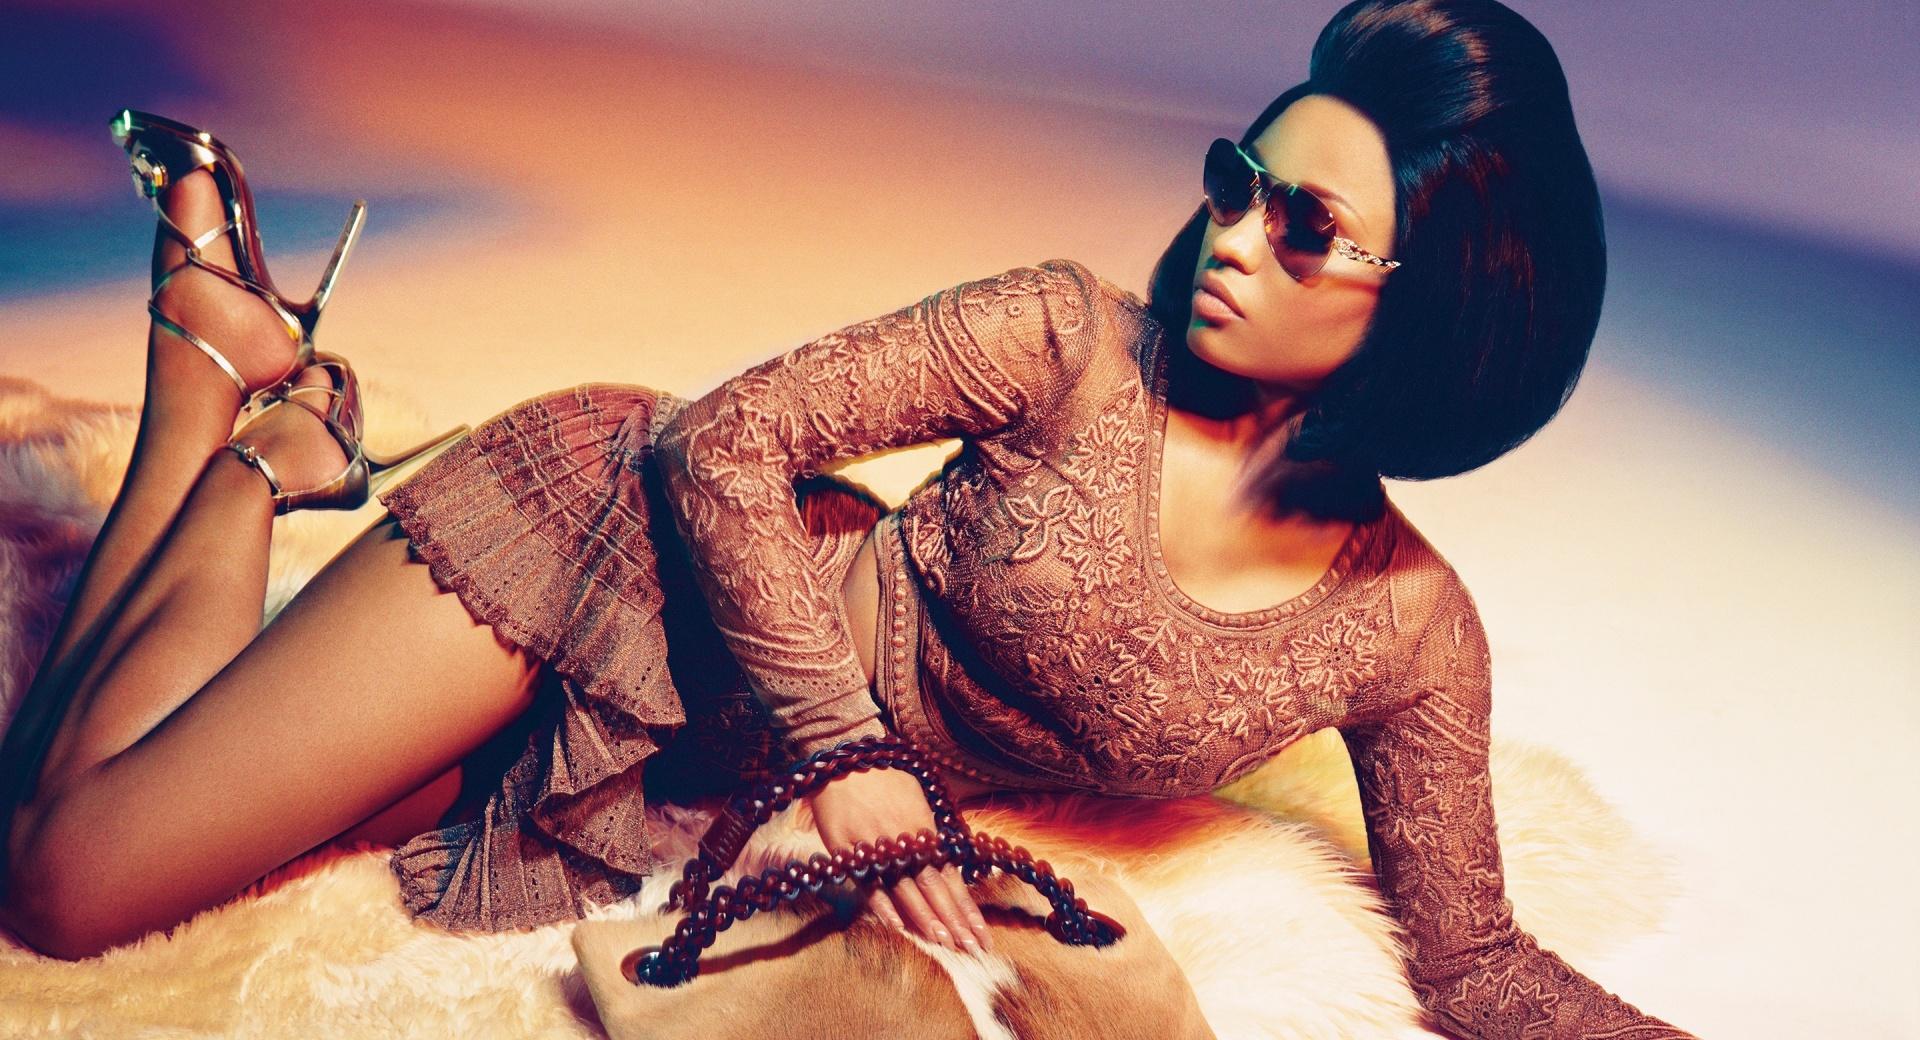 Nicki Minaj Fashion 2015 at 1600 x 1200 size wallpapers HD quality